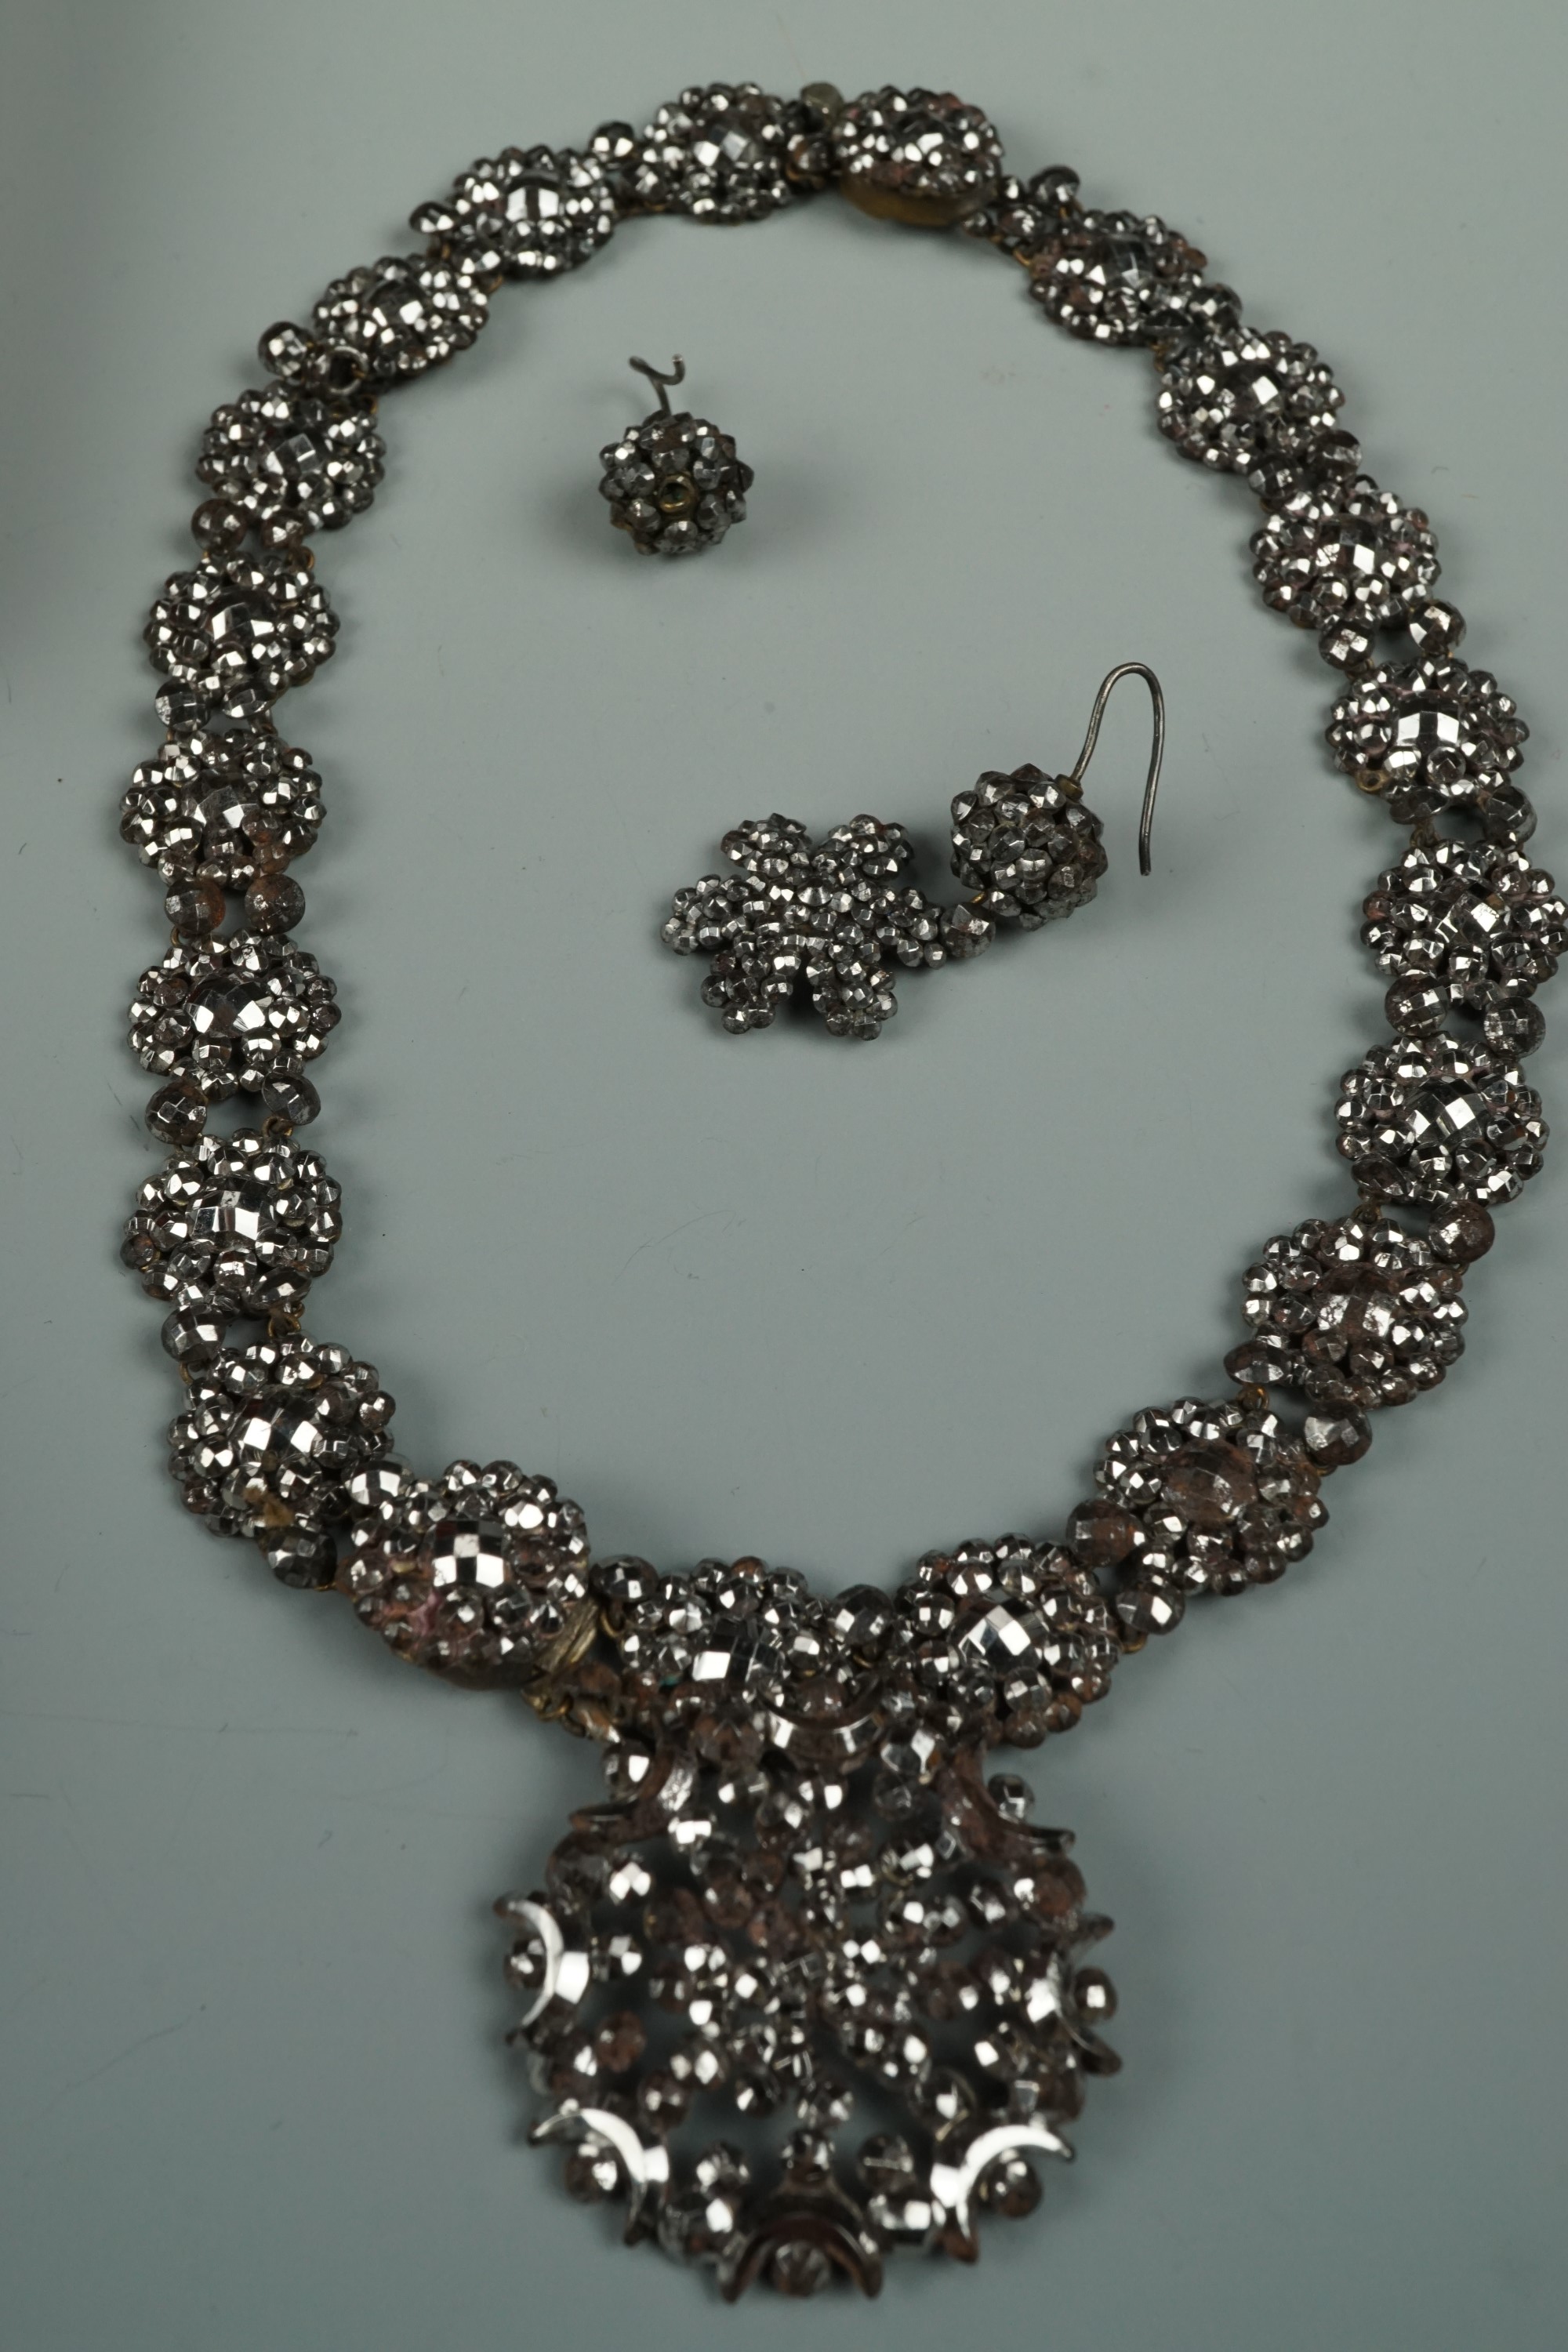 Antique cut steel jewellery parure, comprising pendant necklace, choker, bracelet, bangles, - Image 4 of 5